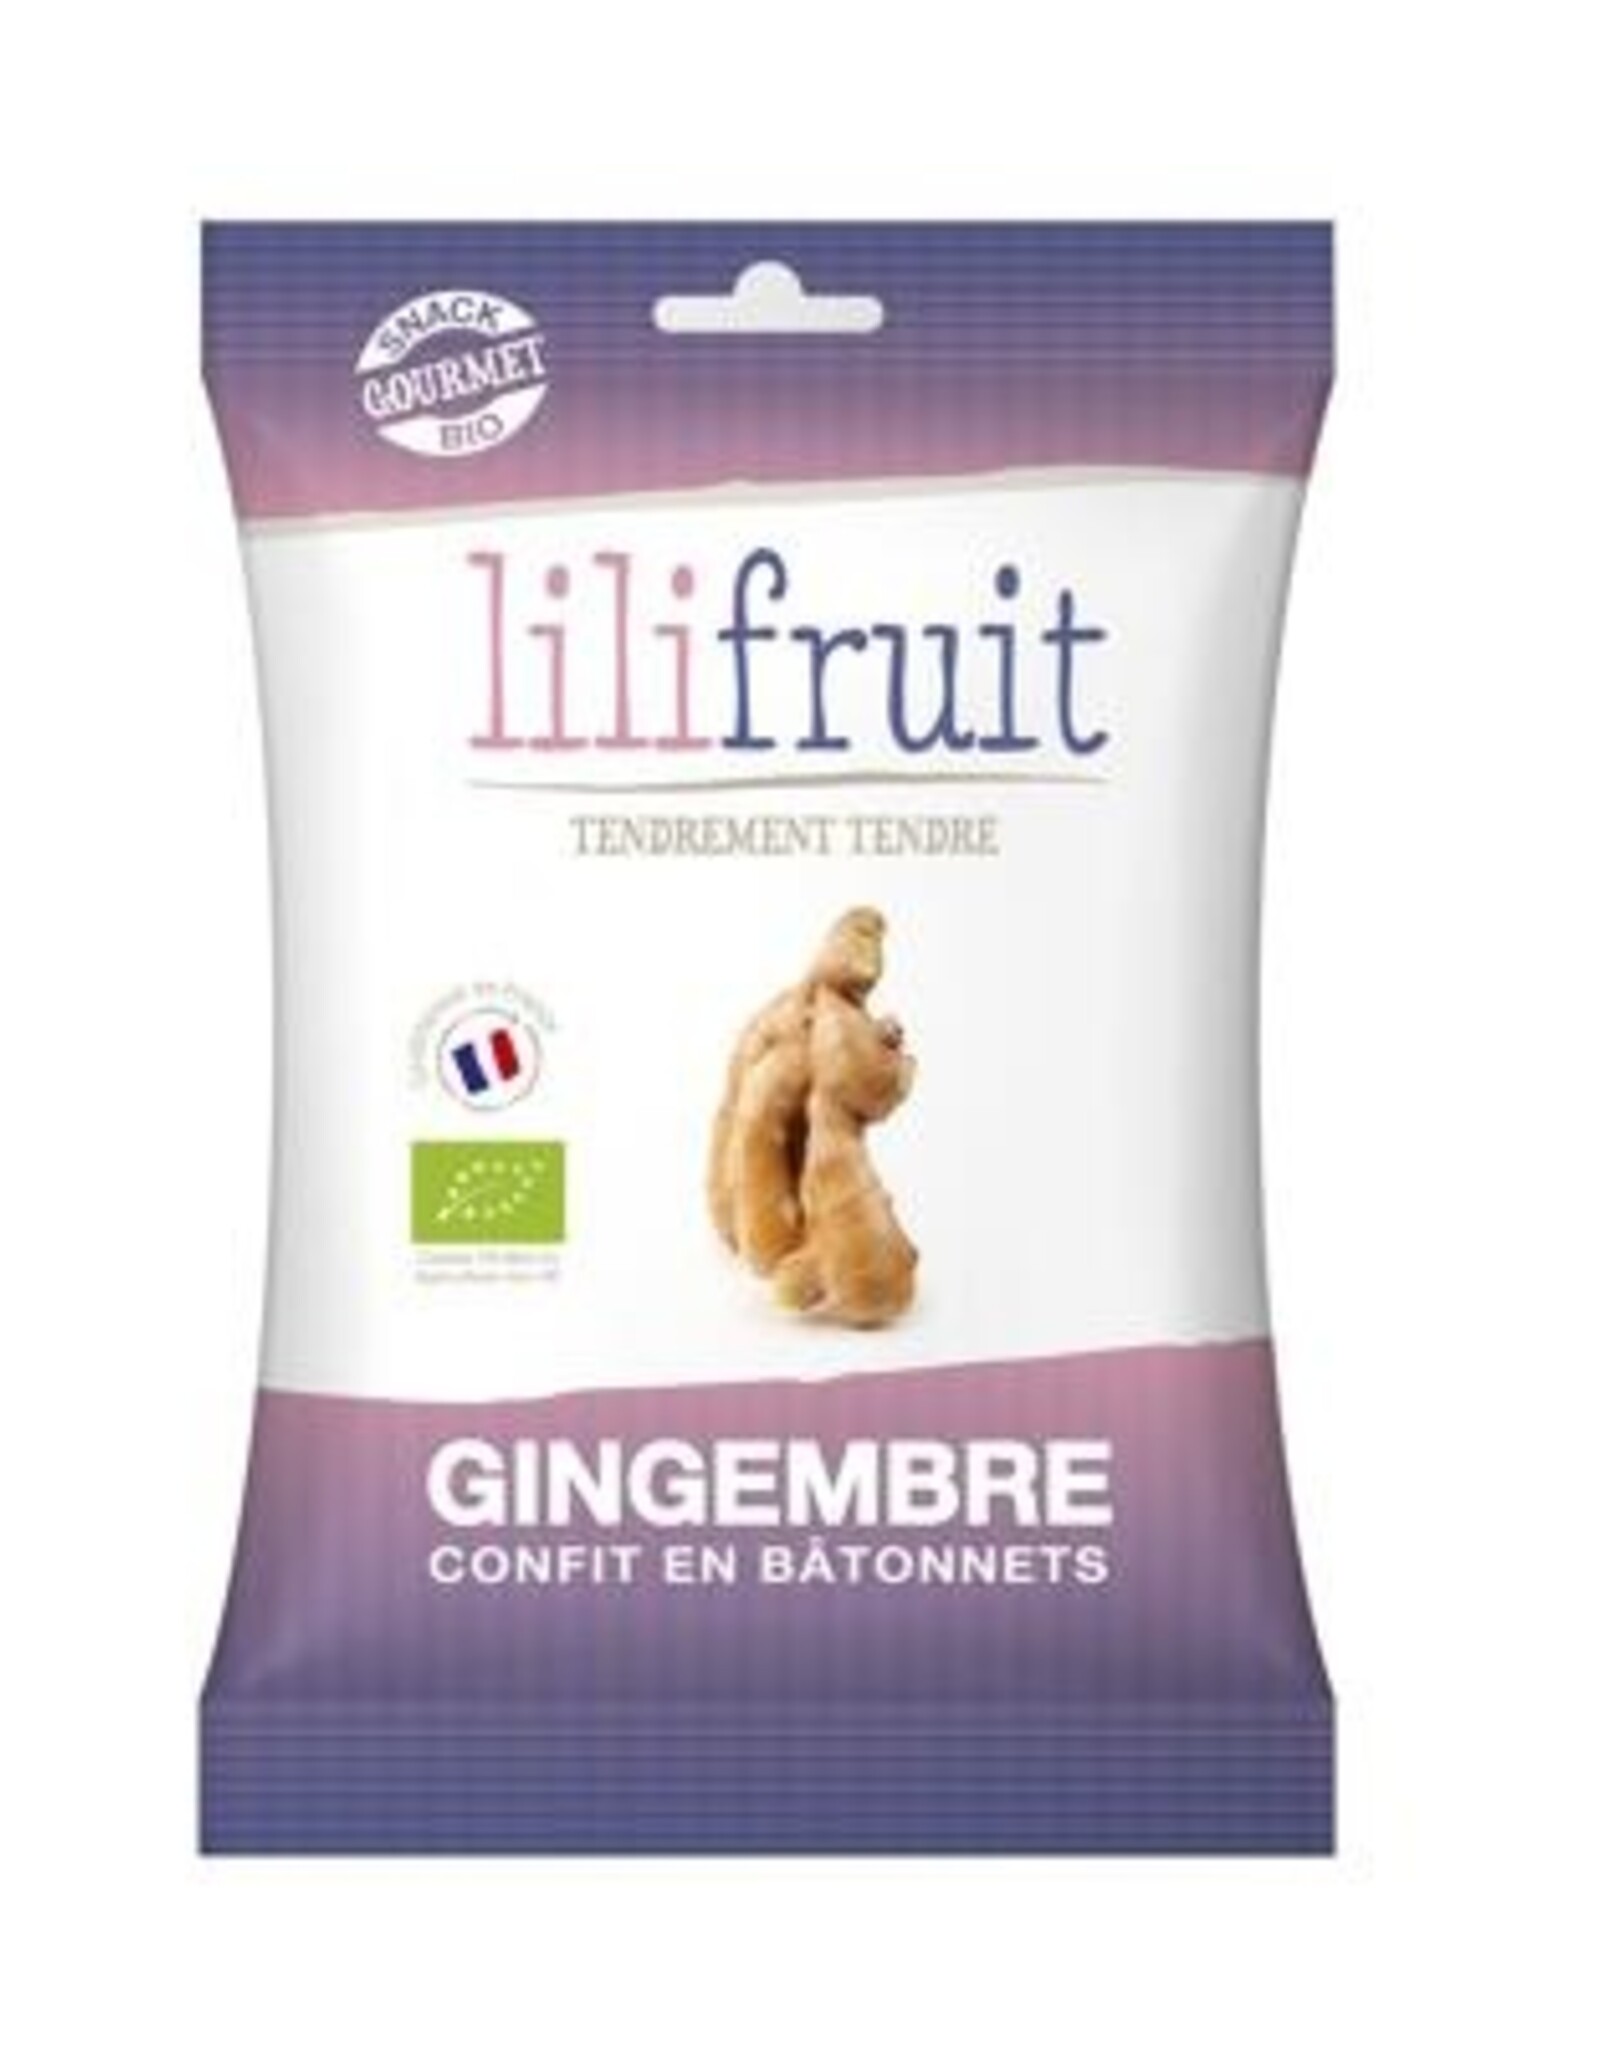 Lilifruit Ginger - 70g